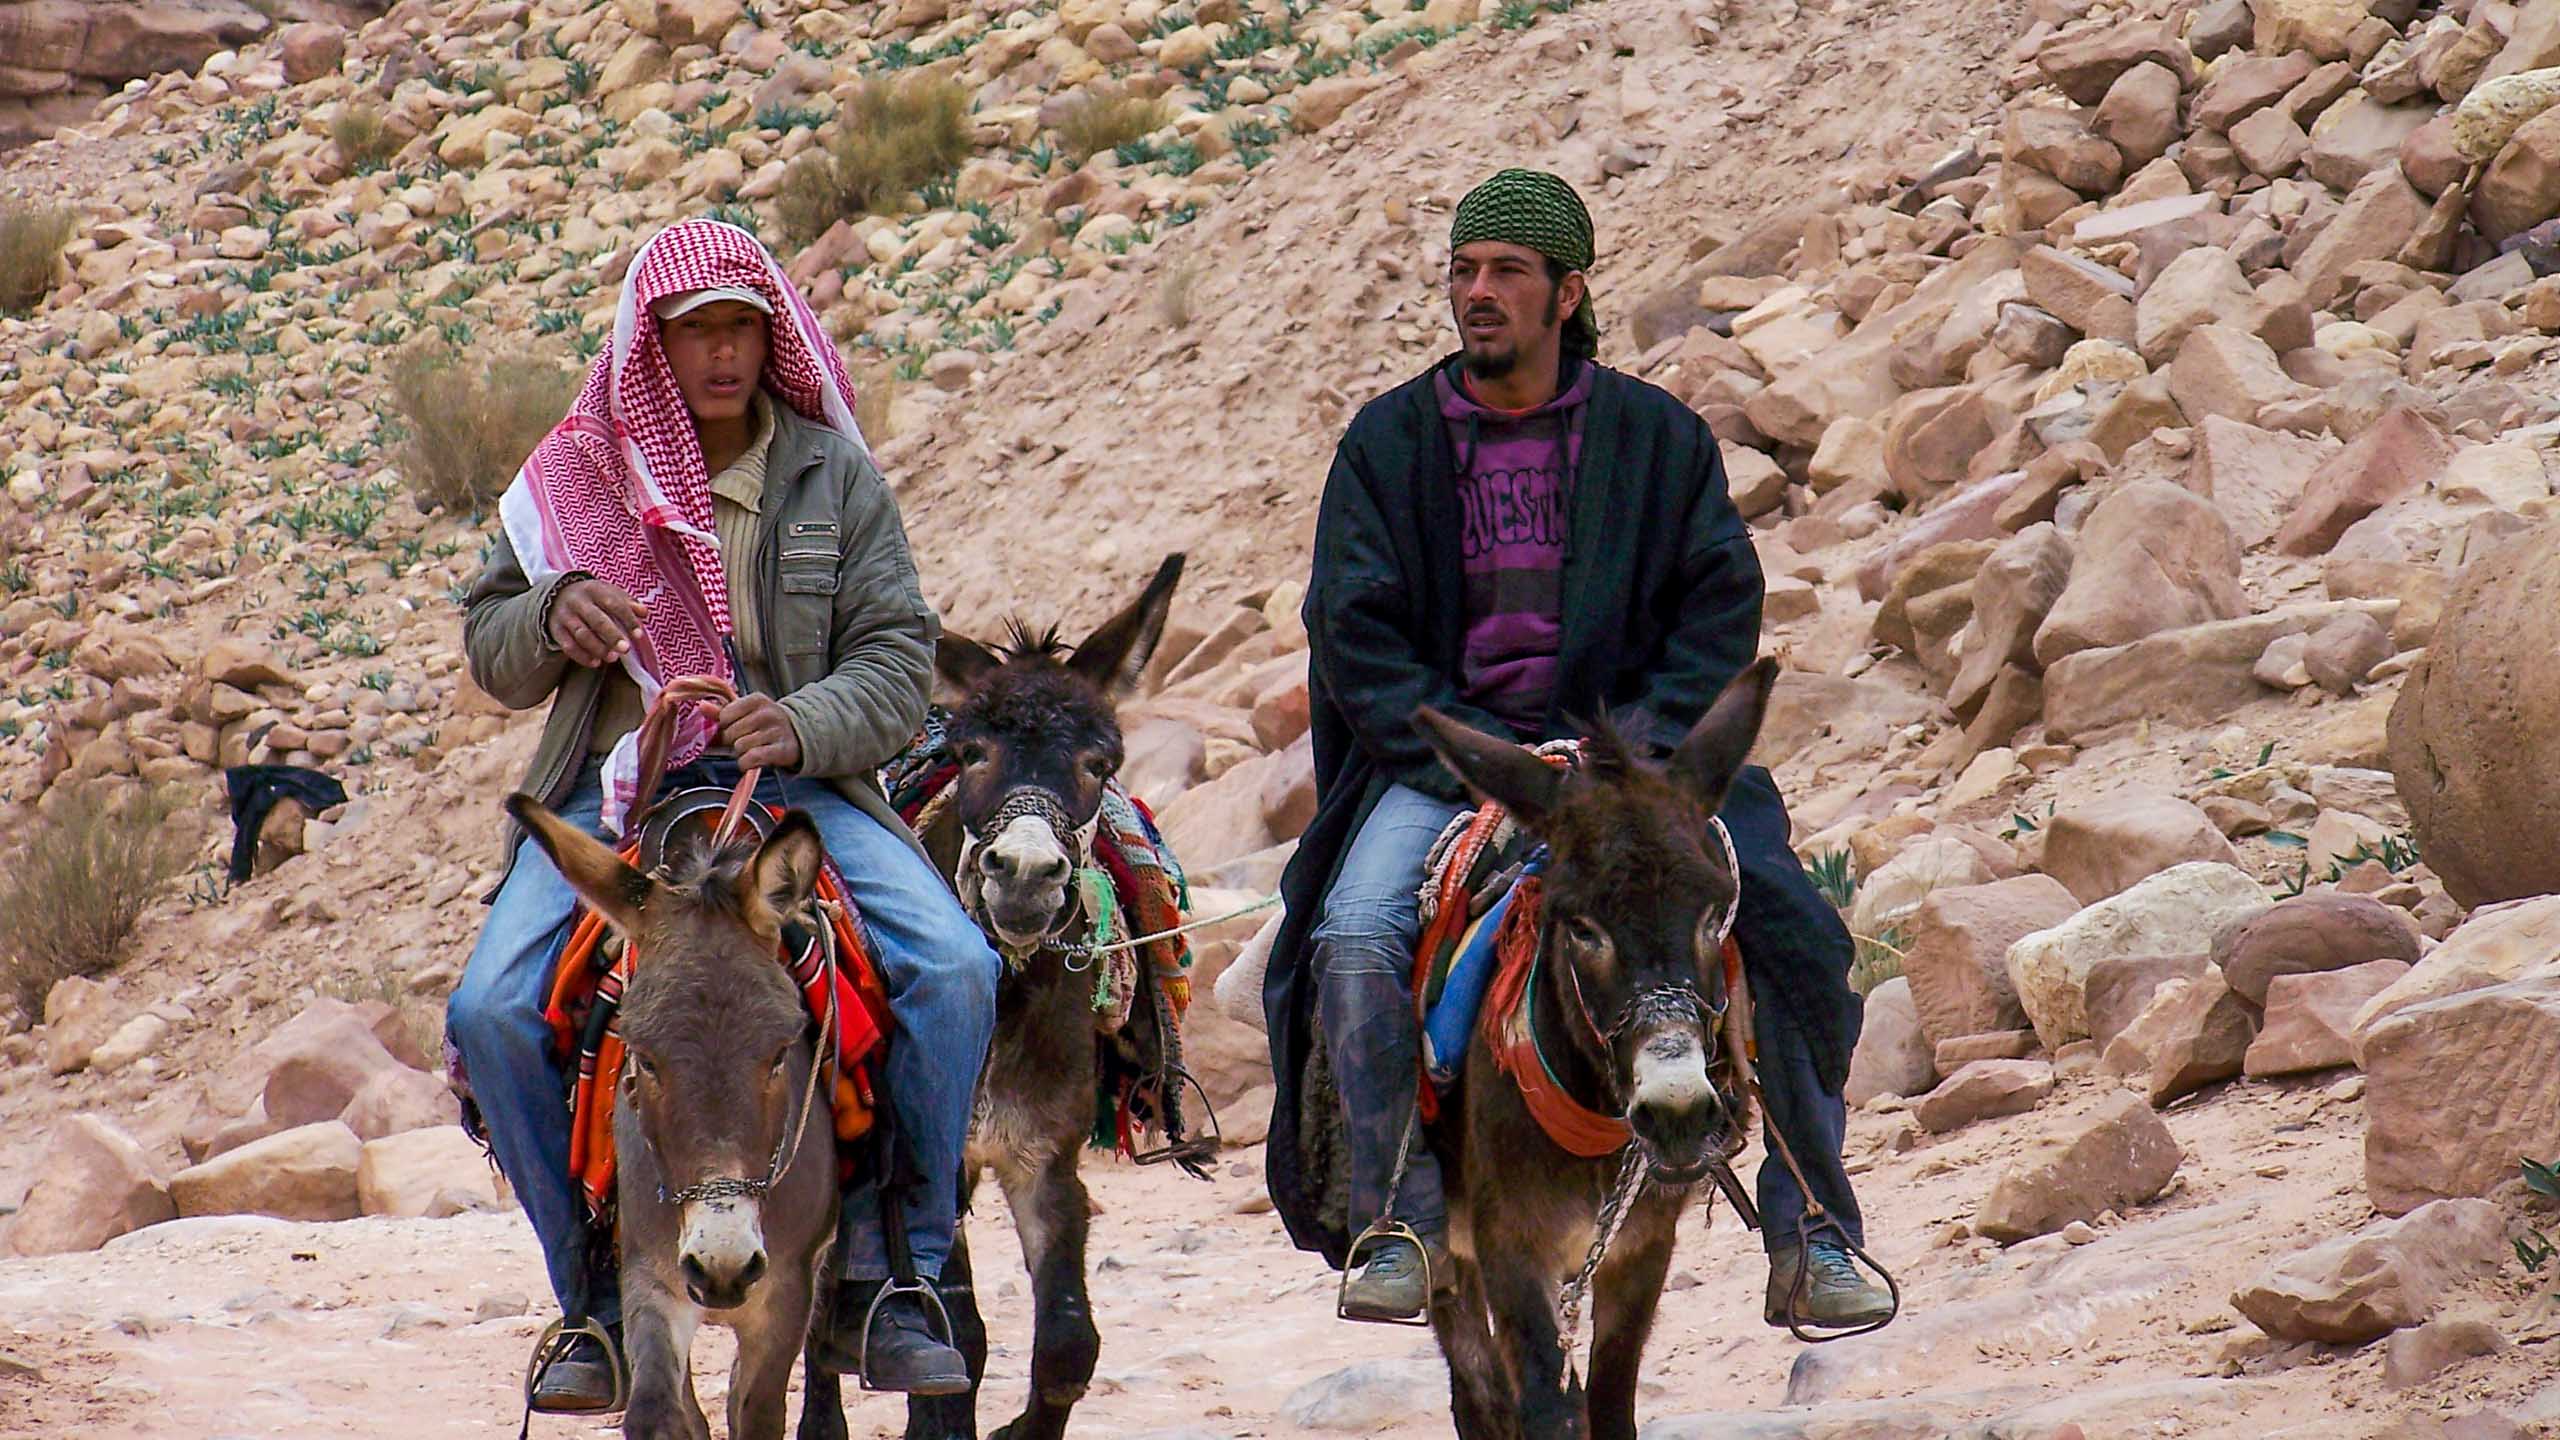 Two men ride on camels in Jordan desert